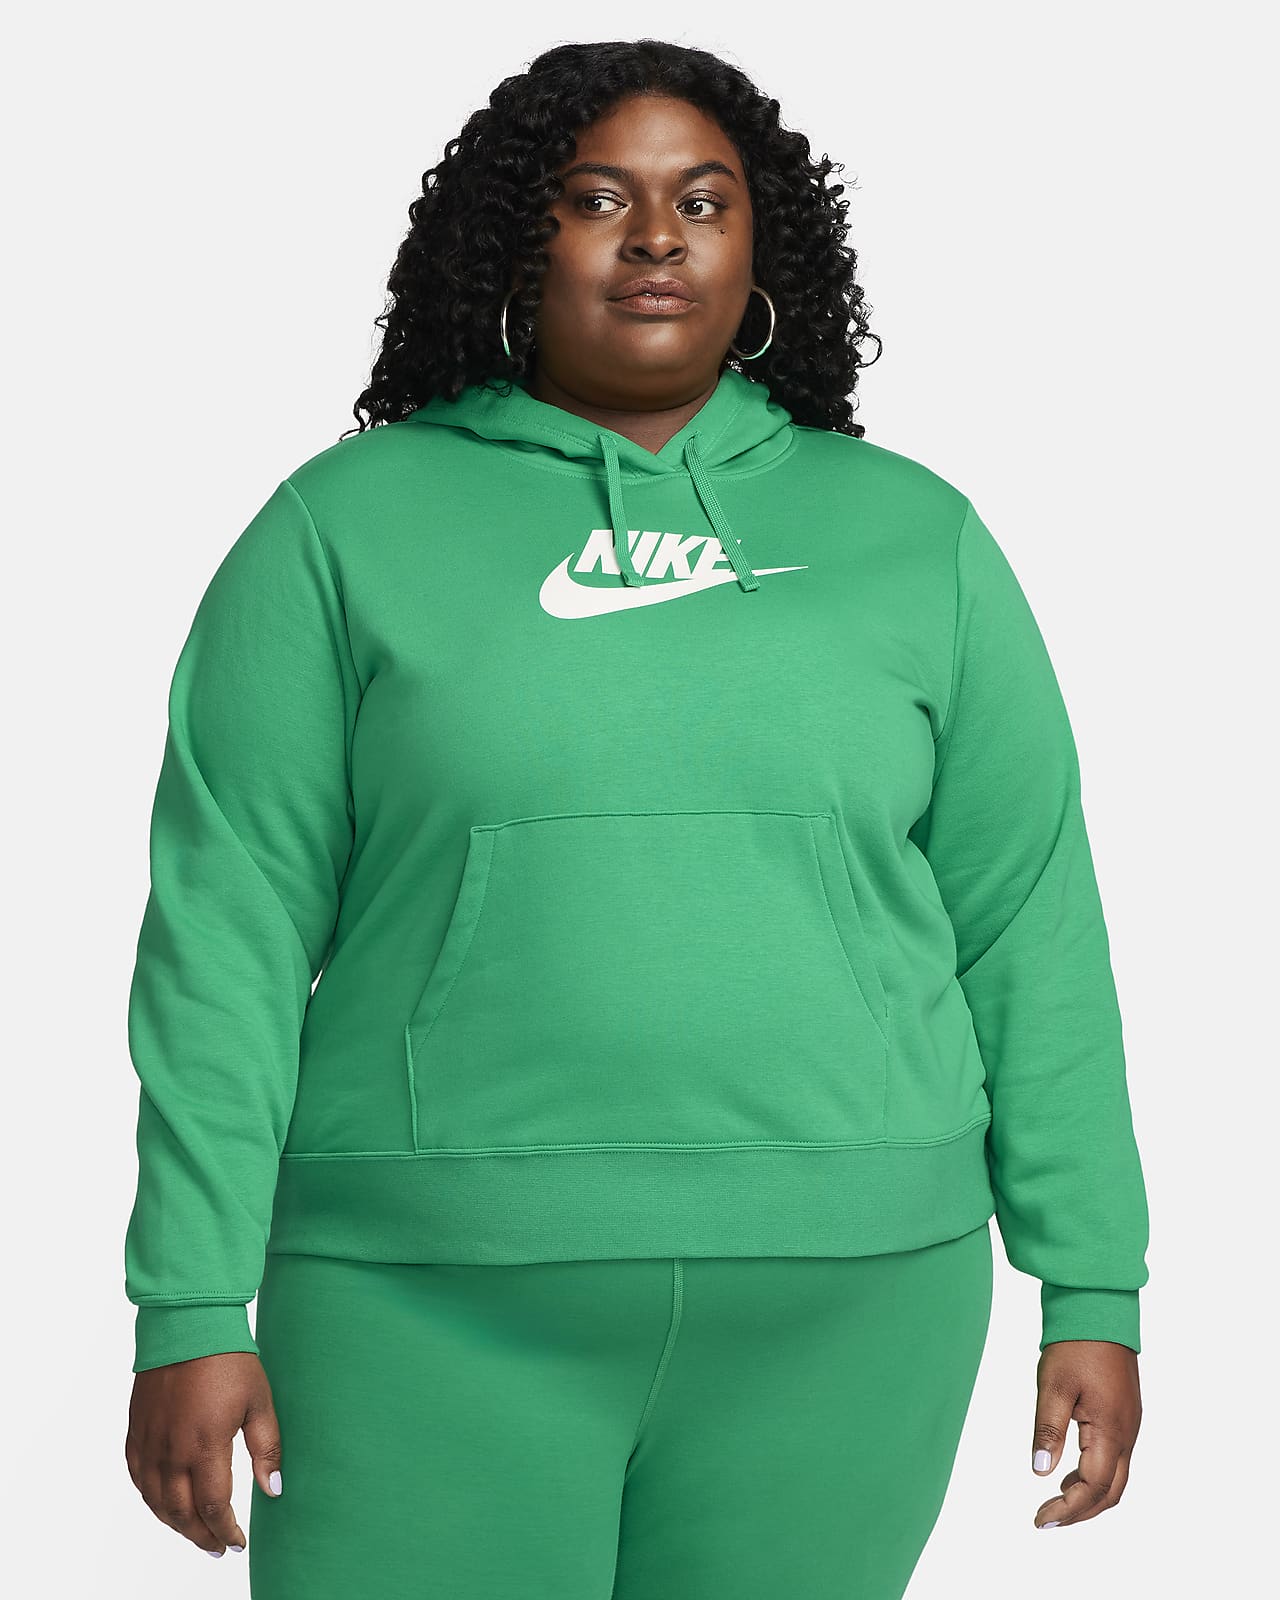 Woman Within Women's Plus Size Layered-Look Sweatshirt